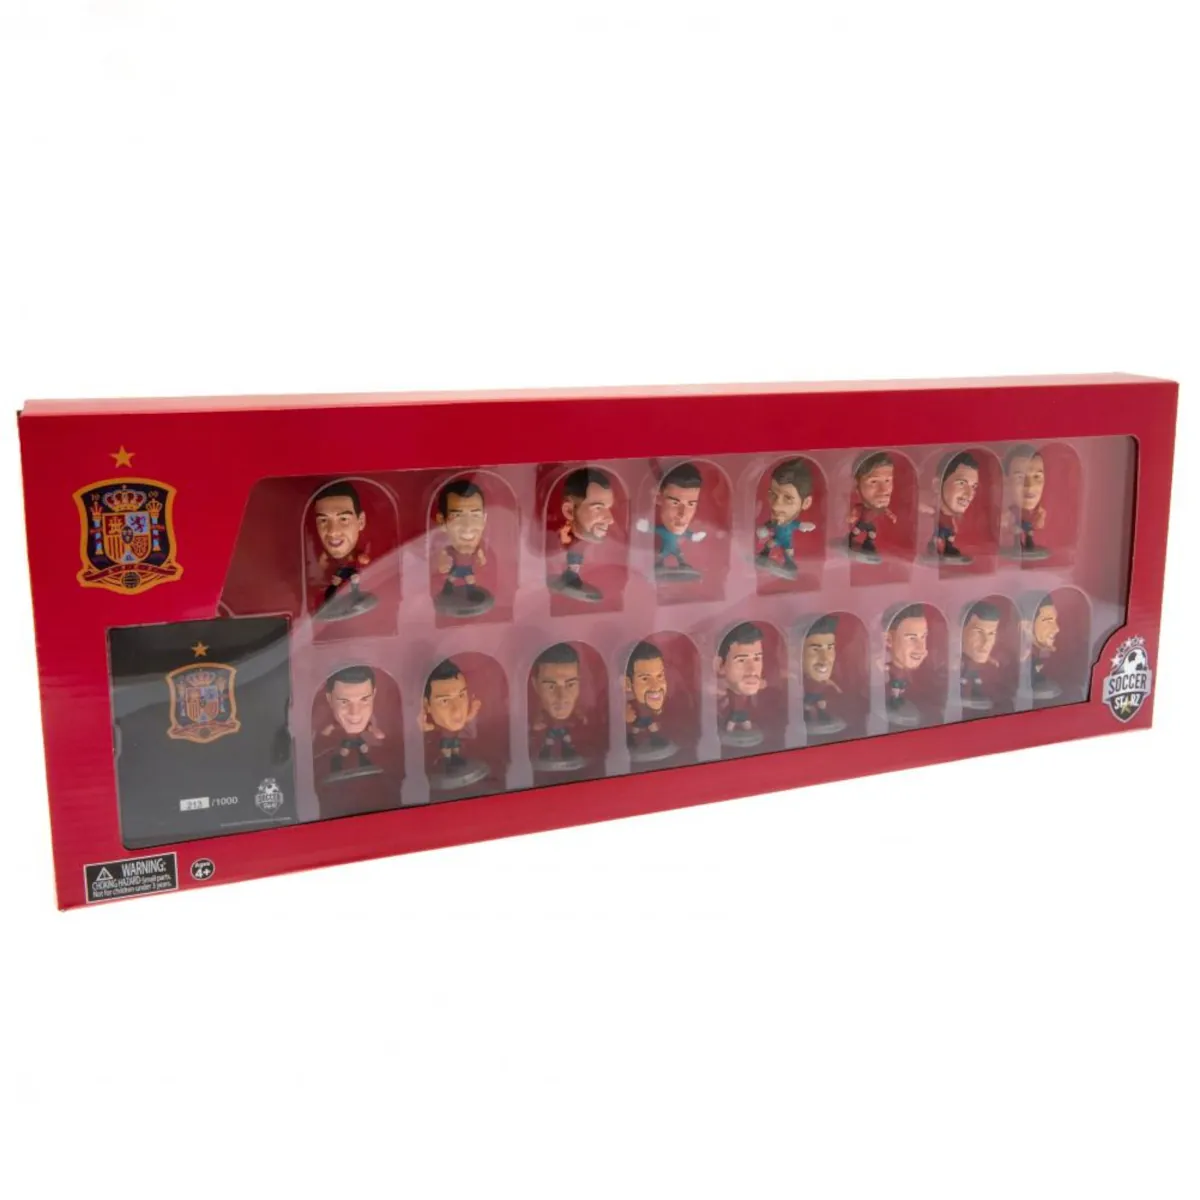 173461 Spain SoccerStarz 17 Player Team Pack 2020 Season Collectable Figures Box